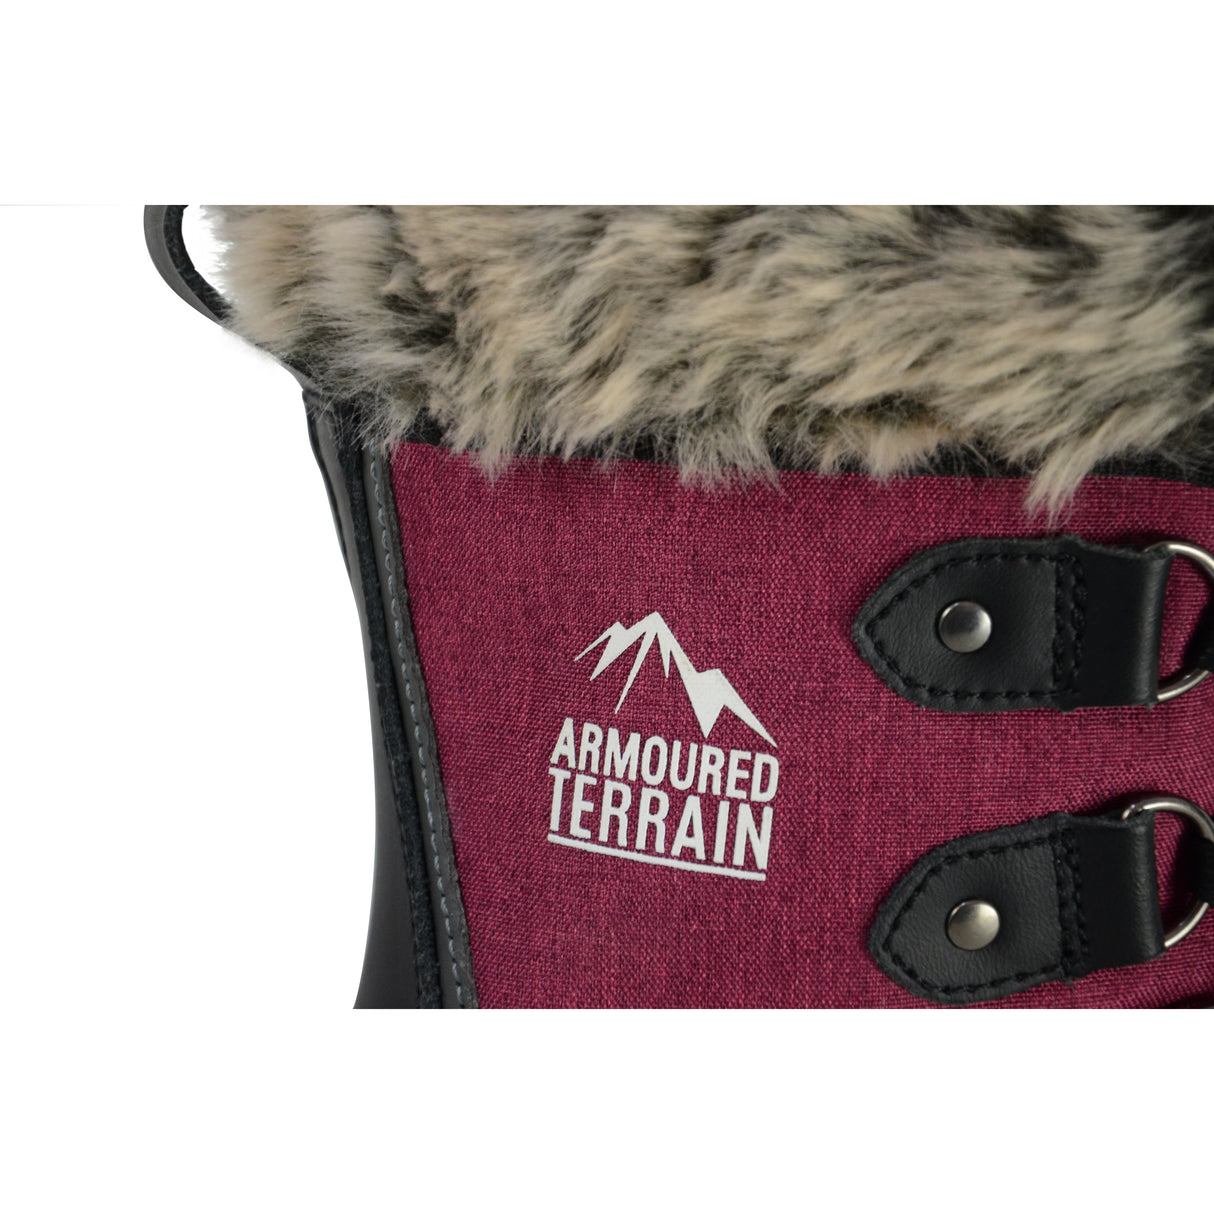 HyLAND Short Mont Blanc Winter Boots